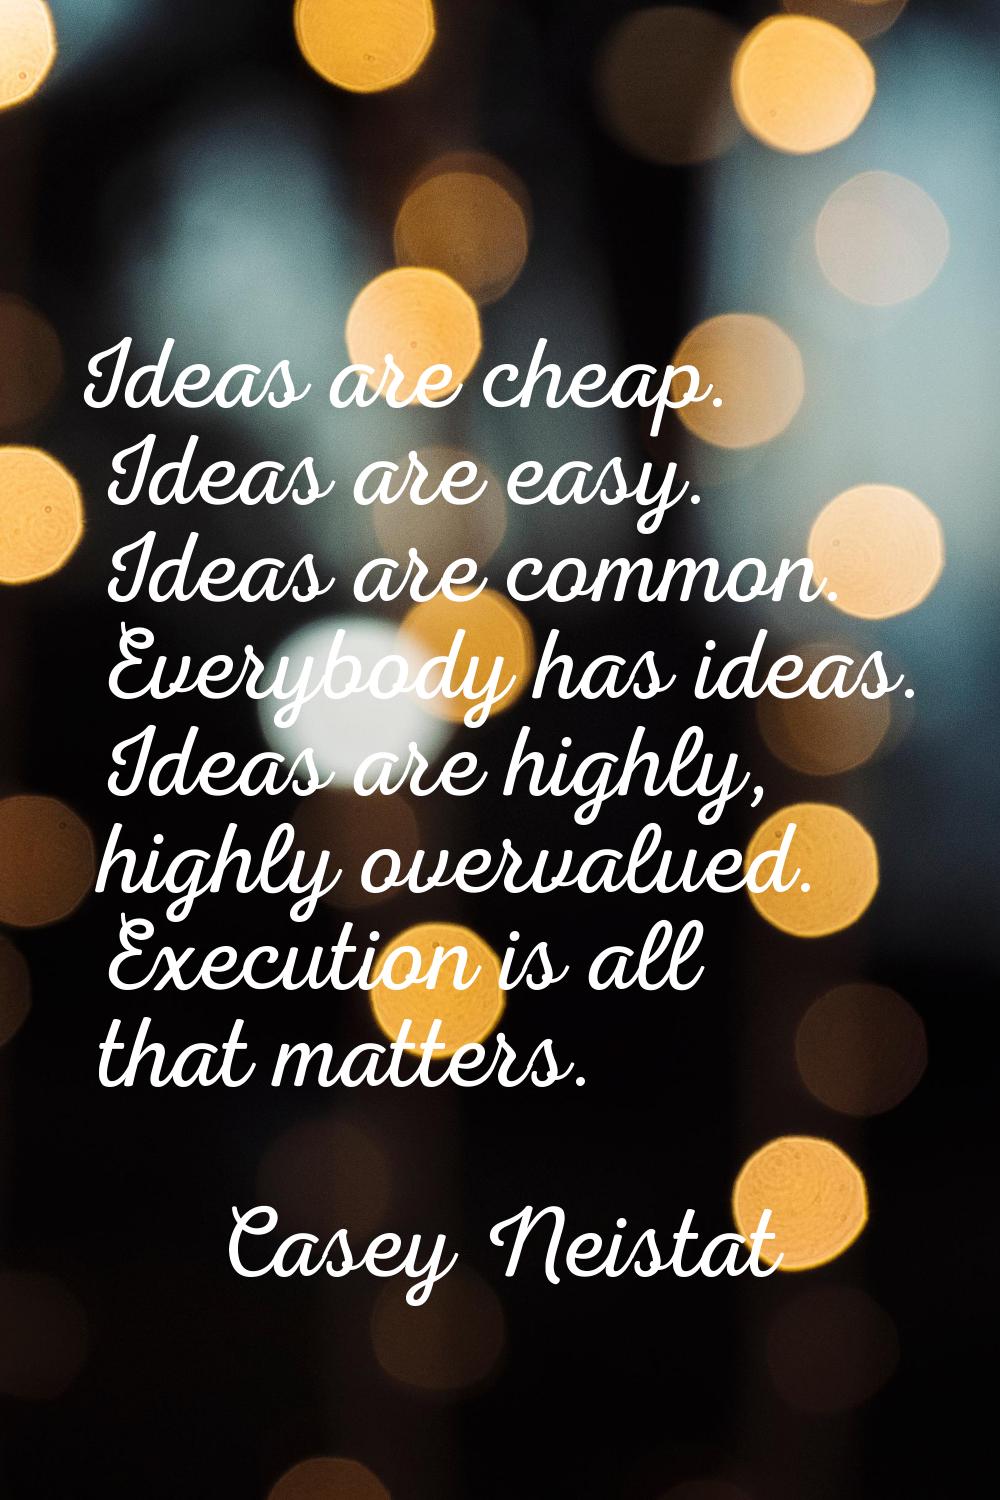 Ideas are cheap. Ideas are easy. Ideas are common. Everybody has ideas. Ideas are highly, highly ov